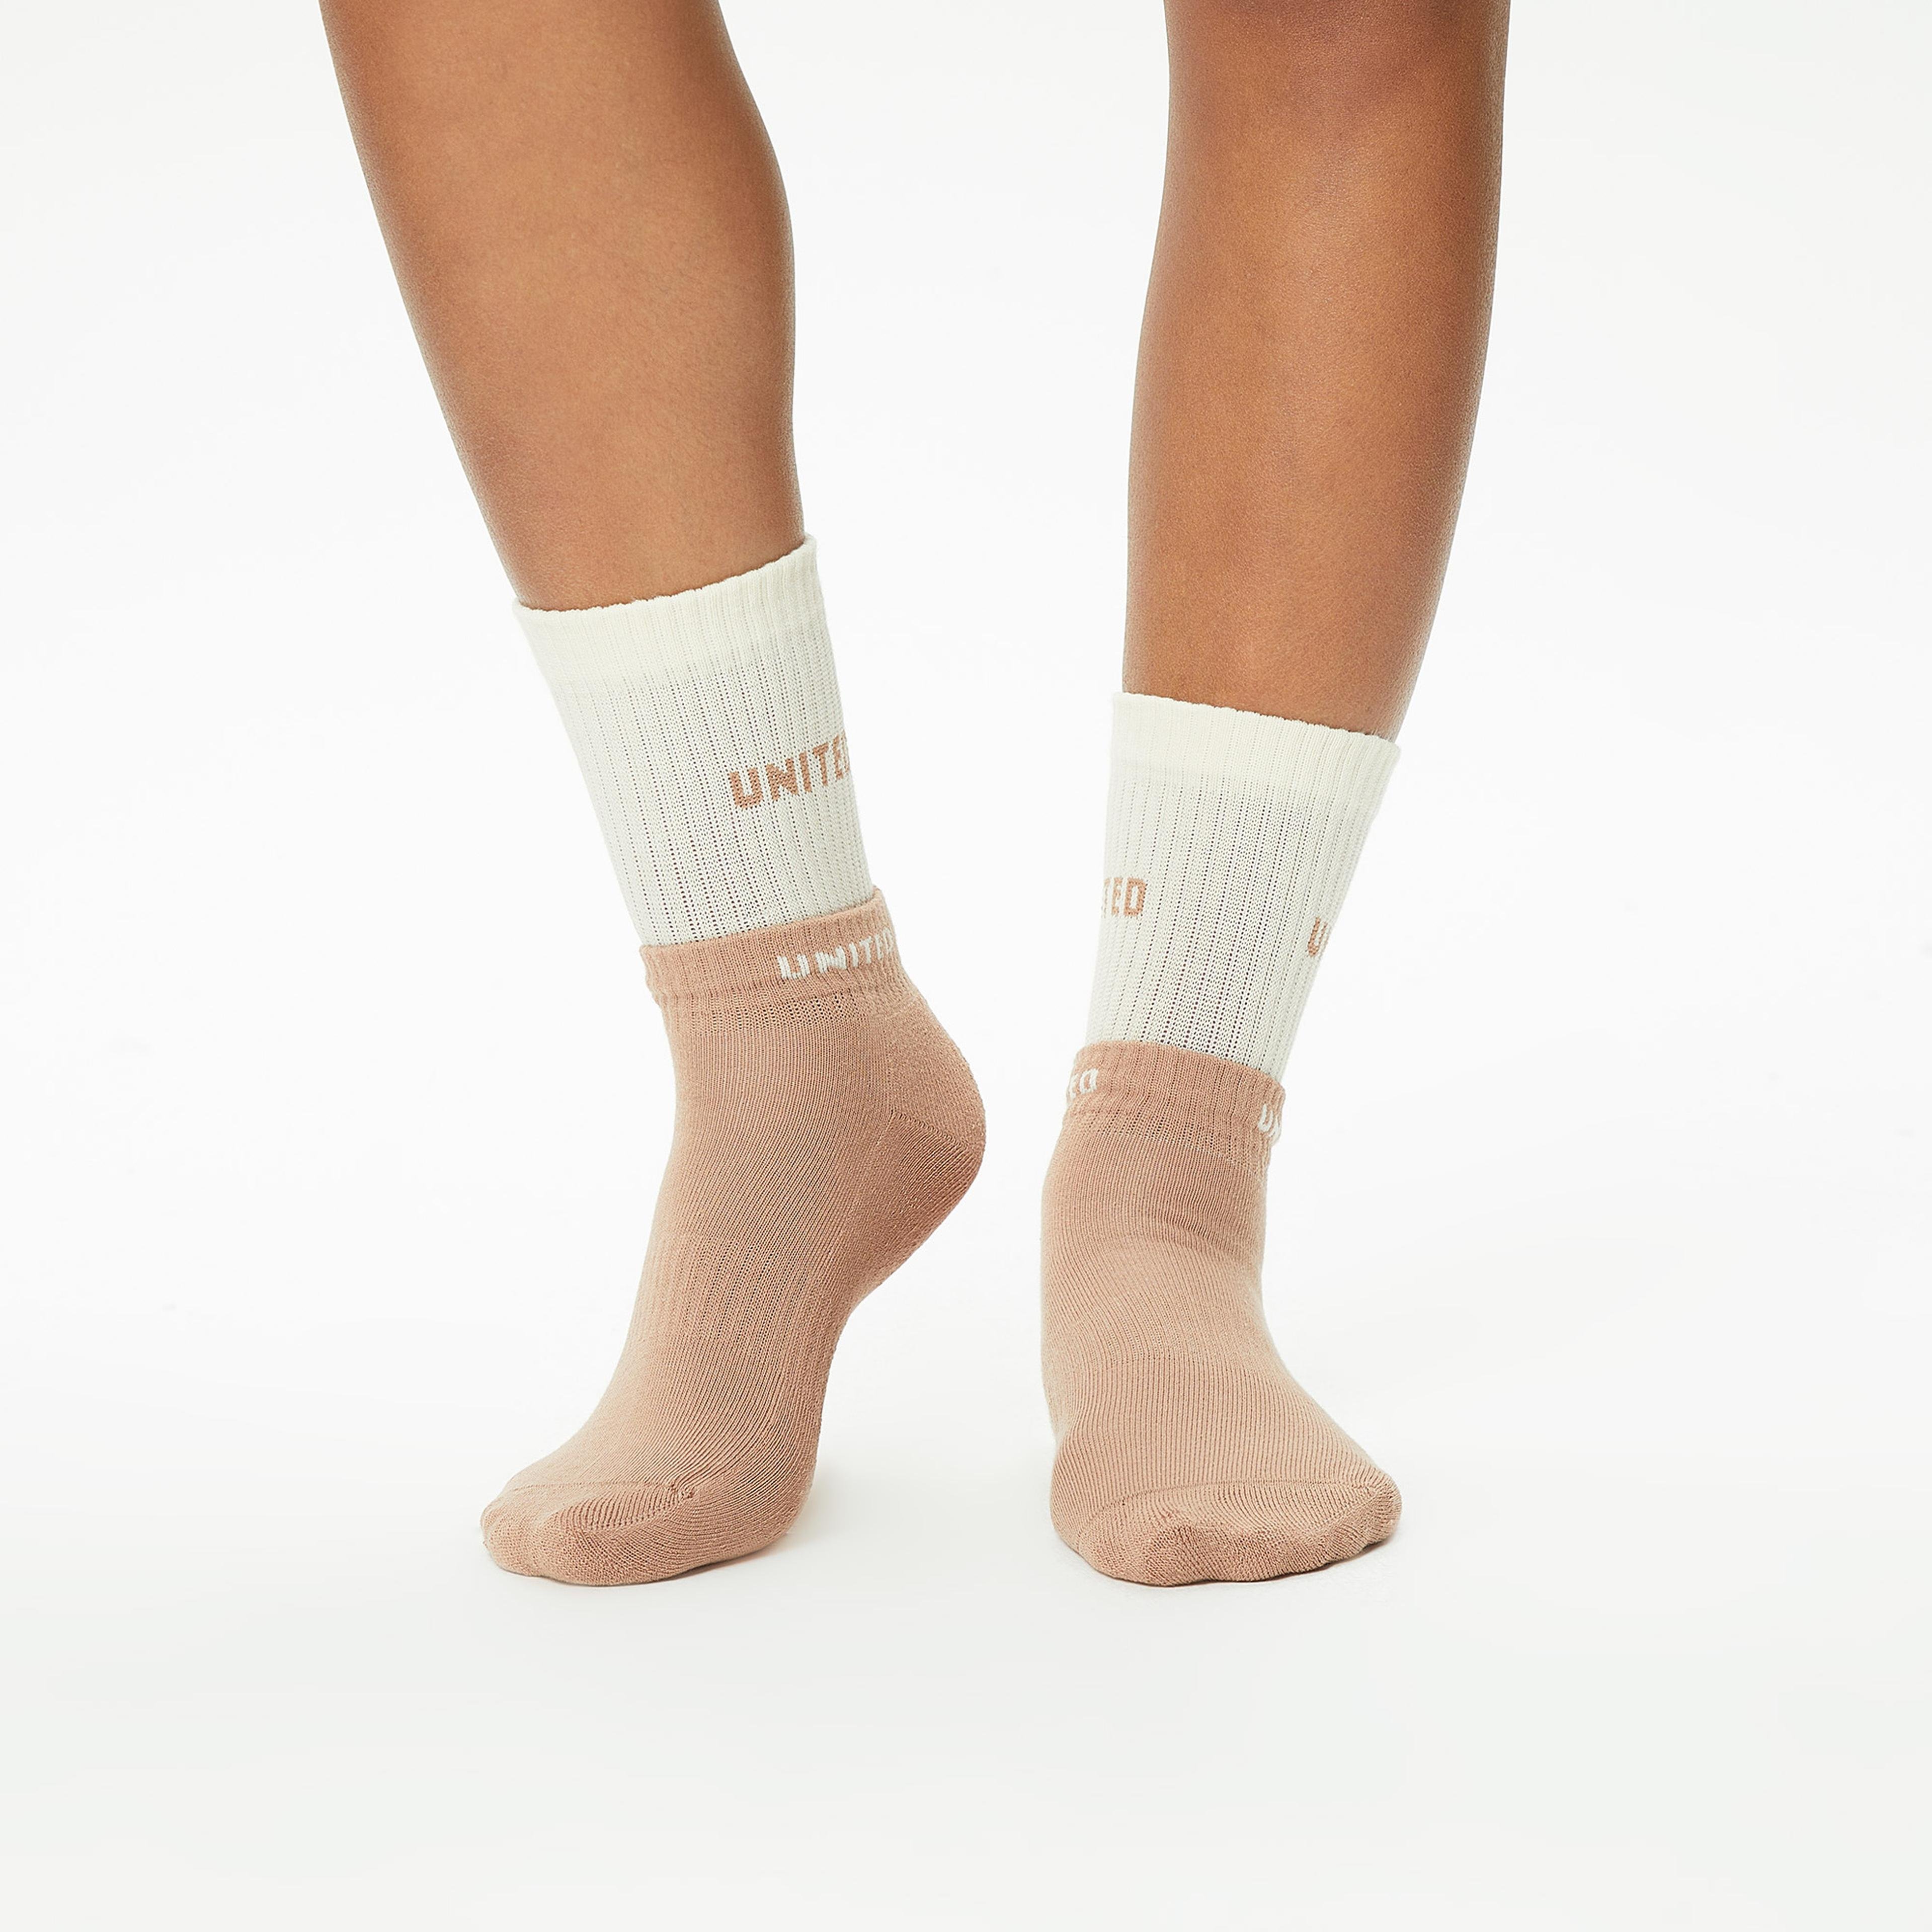 United4 Street  Unisex Kahverengi/Beyaz  Çorap